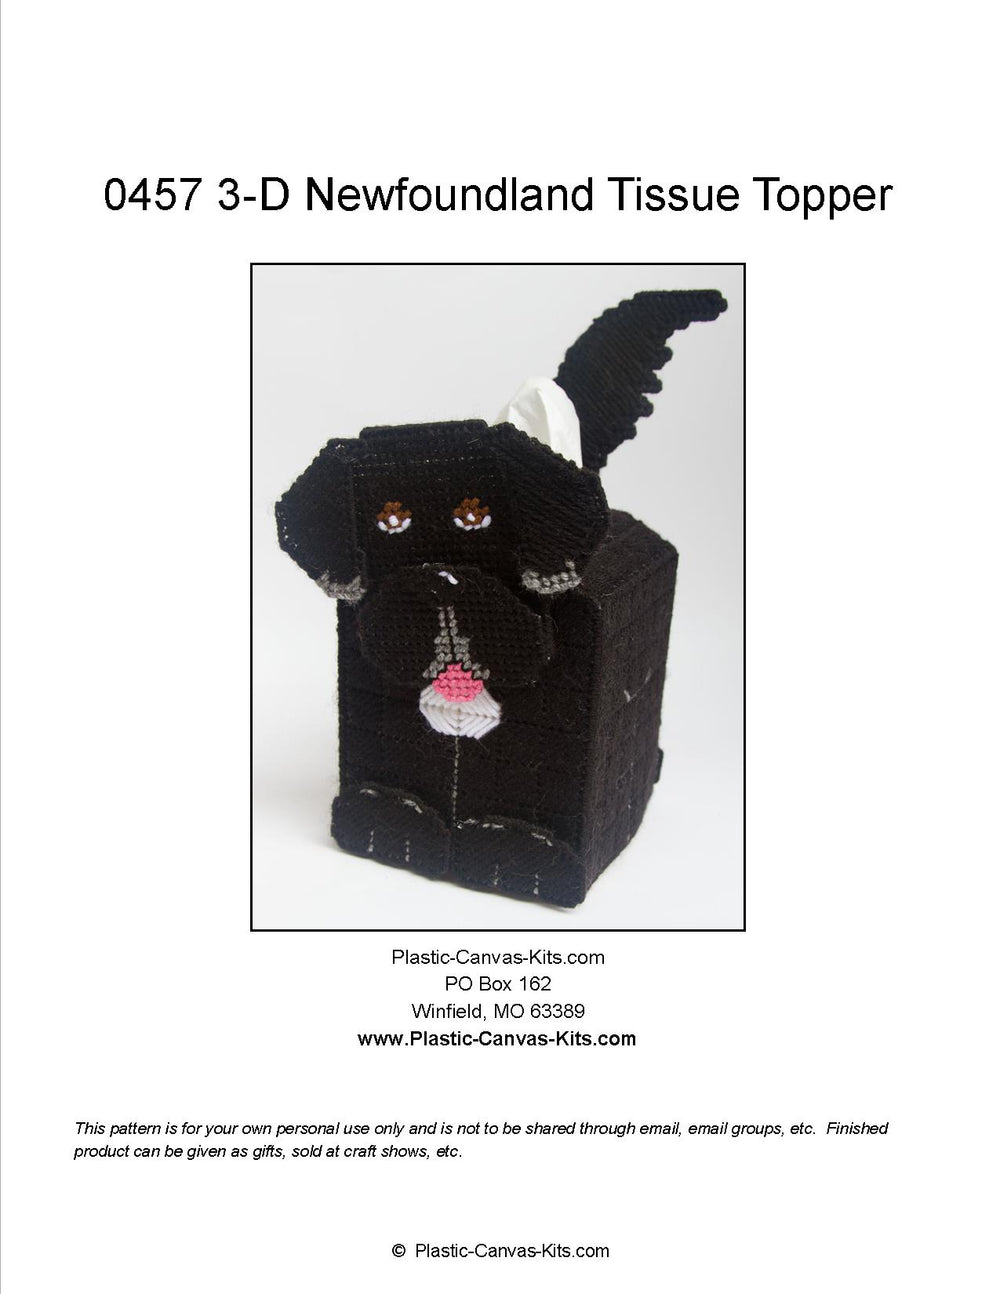 Newfoundland 3-D Tissue Topper